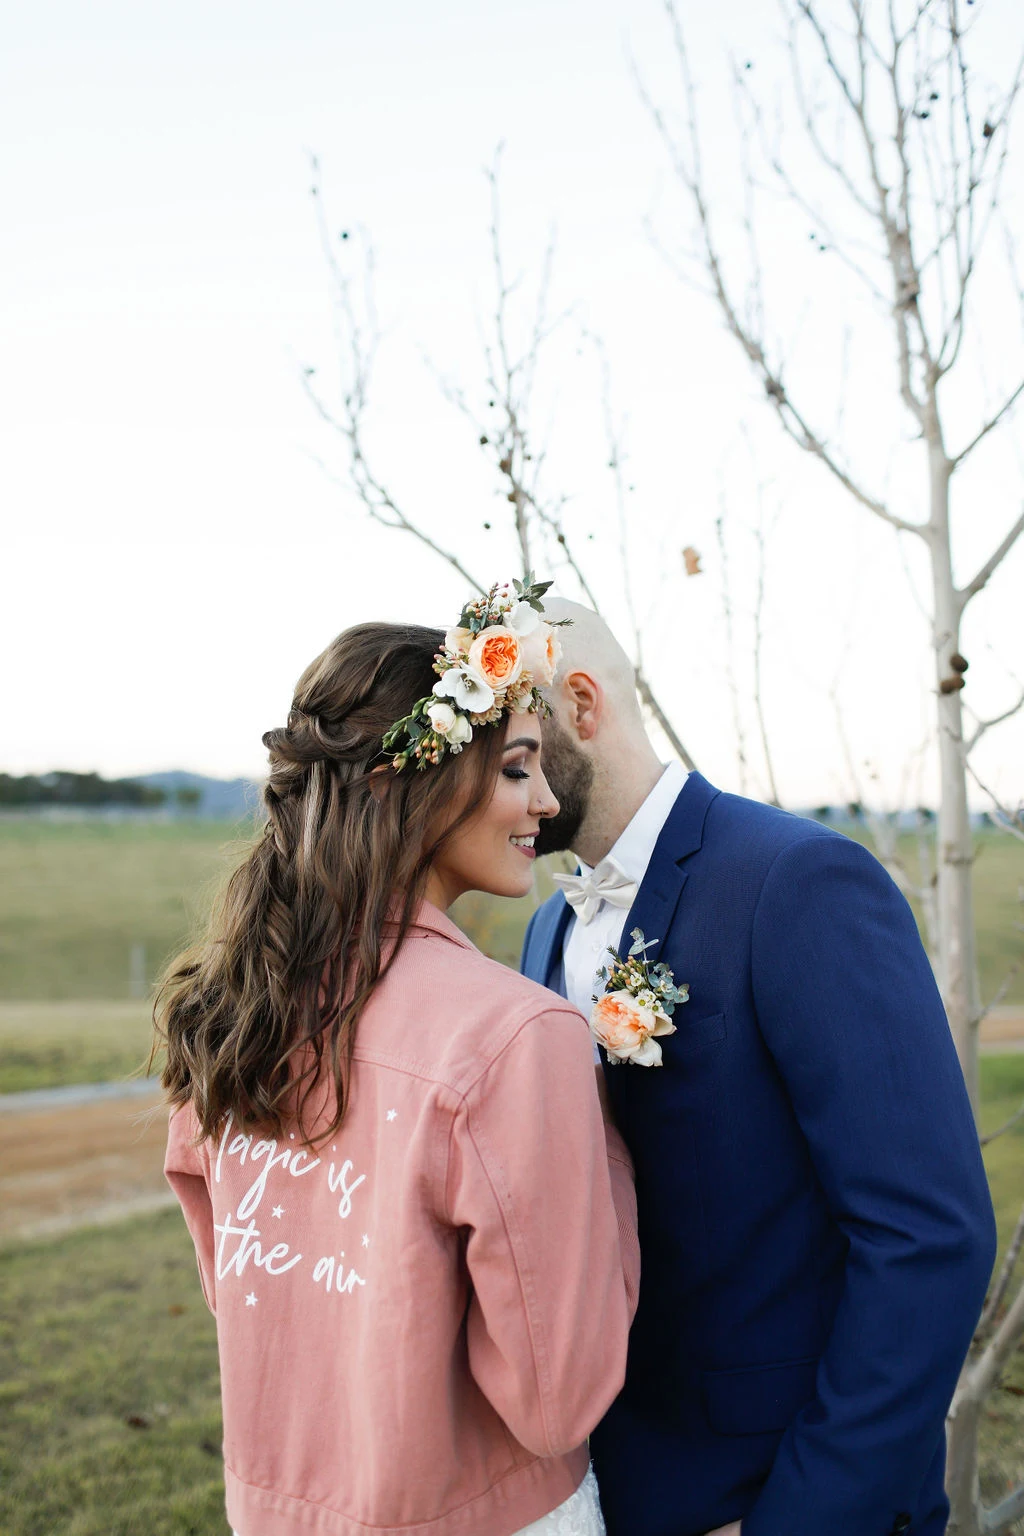 wild flower photography newcastle bohemian wedding ideas florals bridal gown groom attire australian designer